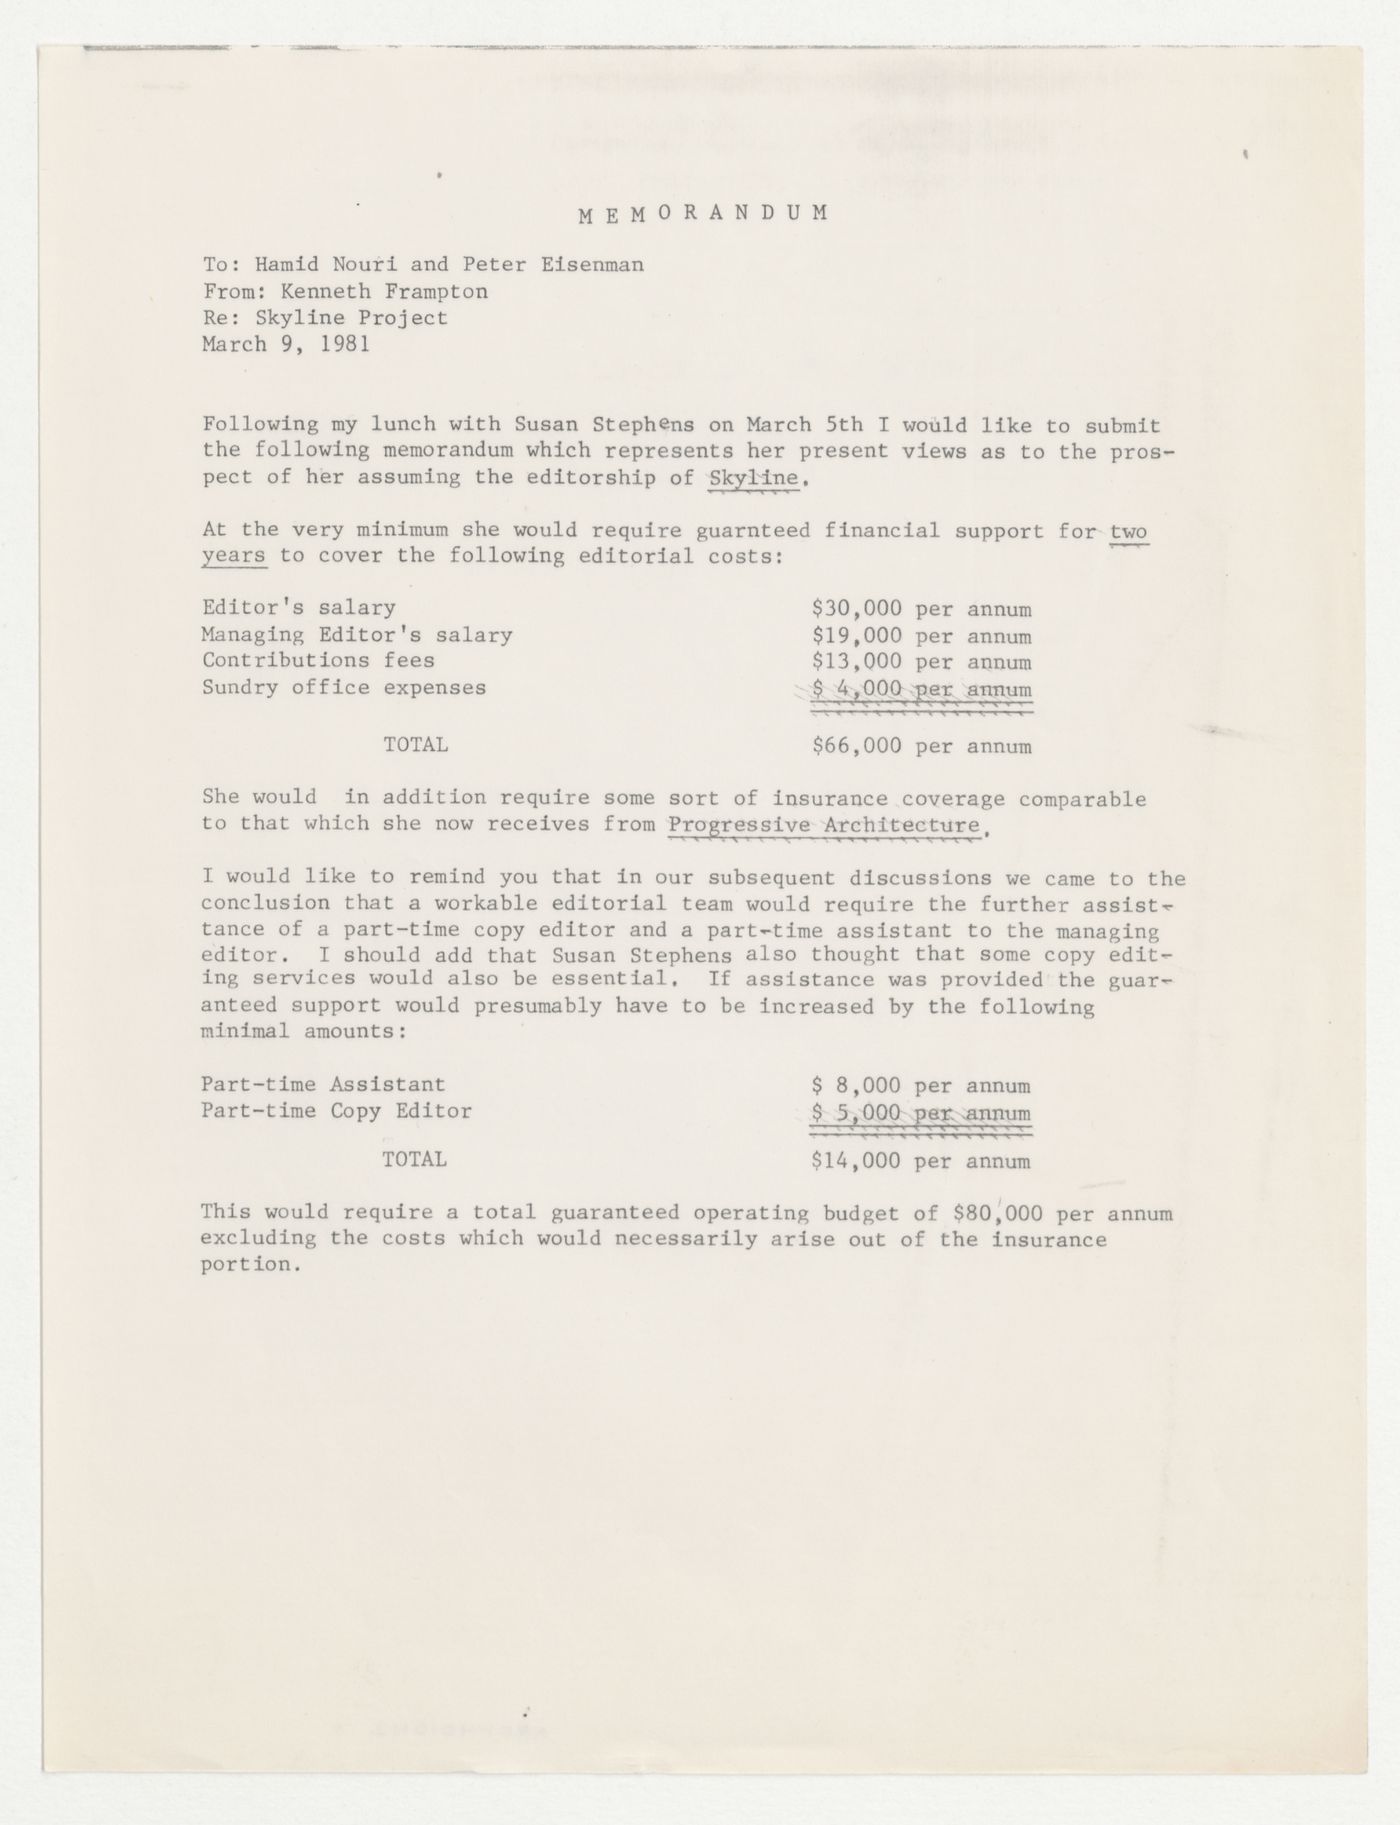 Memorandum from Kenneth Frampton to Hamid Nouri and Peter D. Eisenman about Skyline